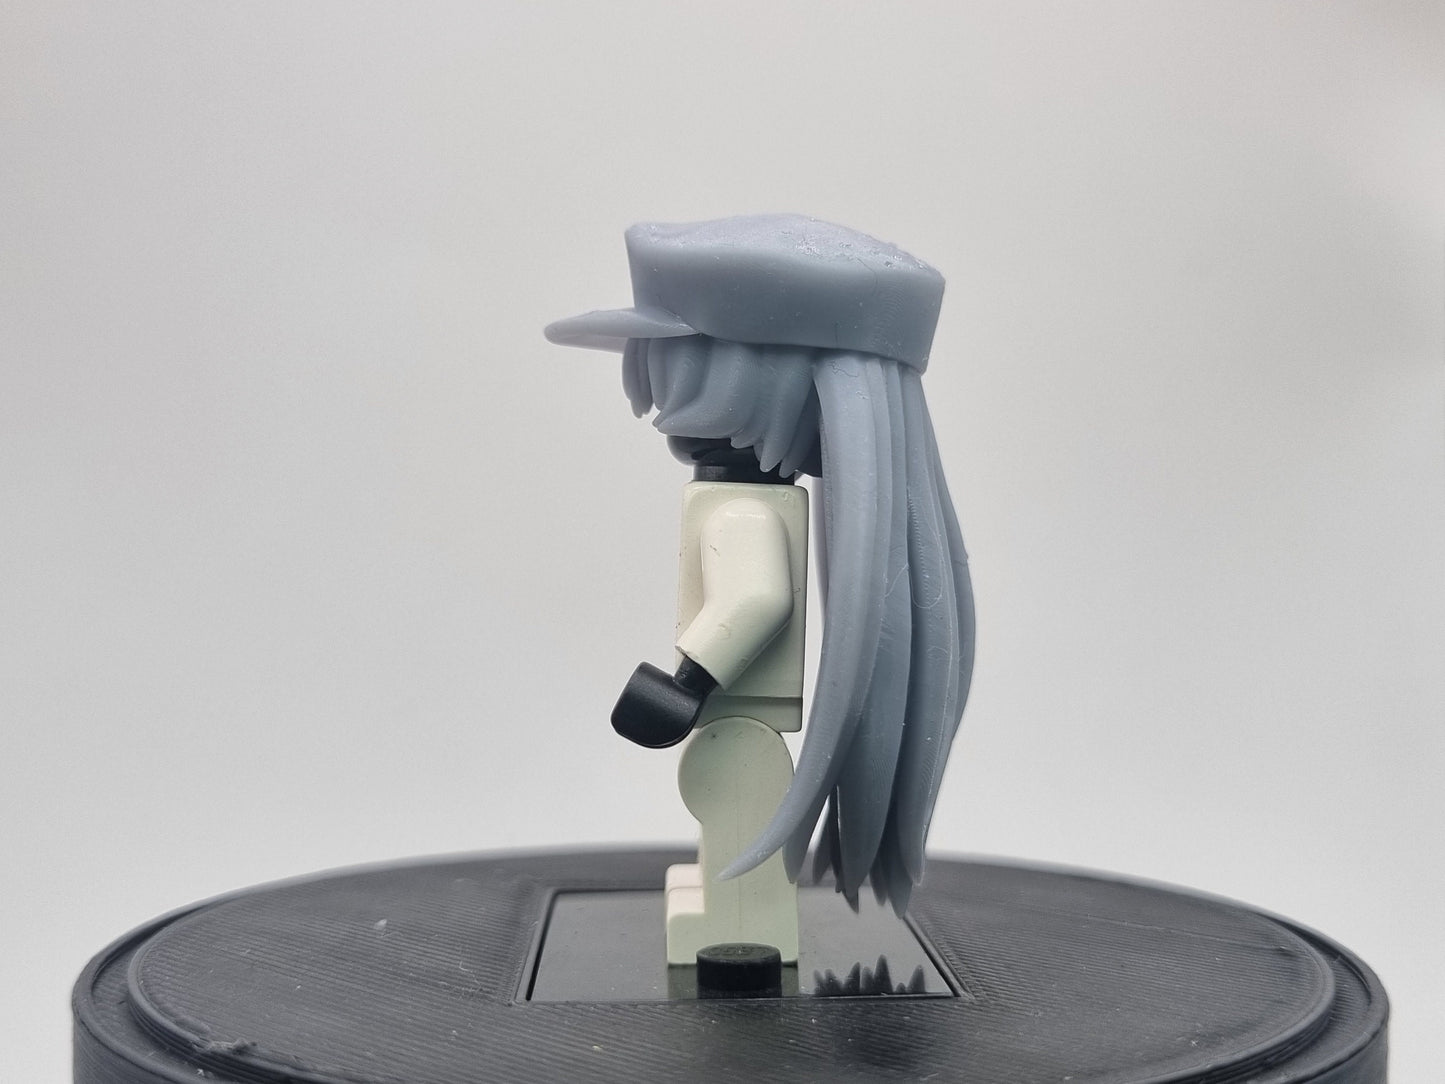 Building toy custom 3D waifu with cap!